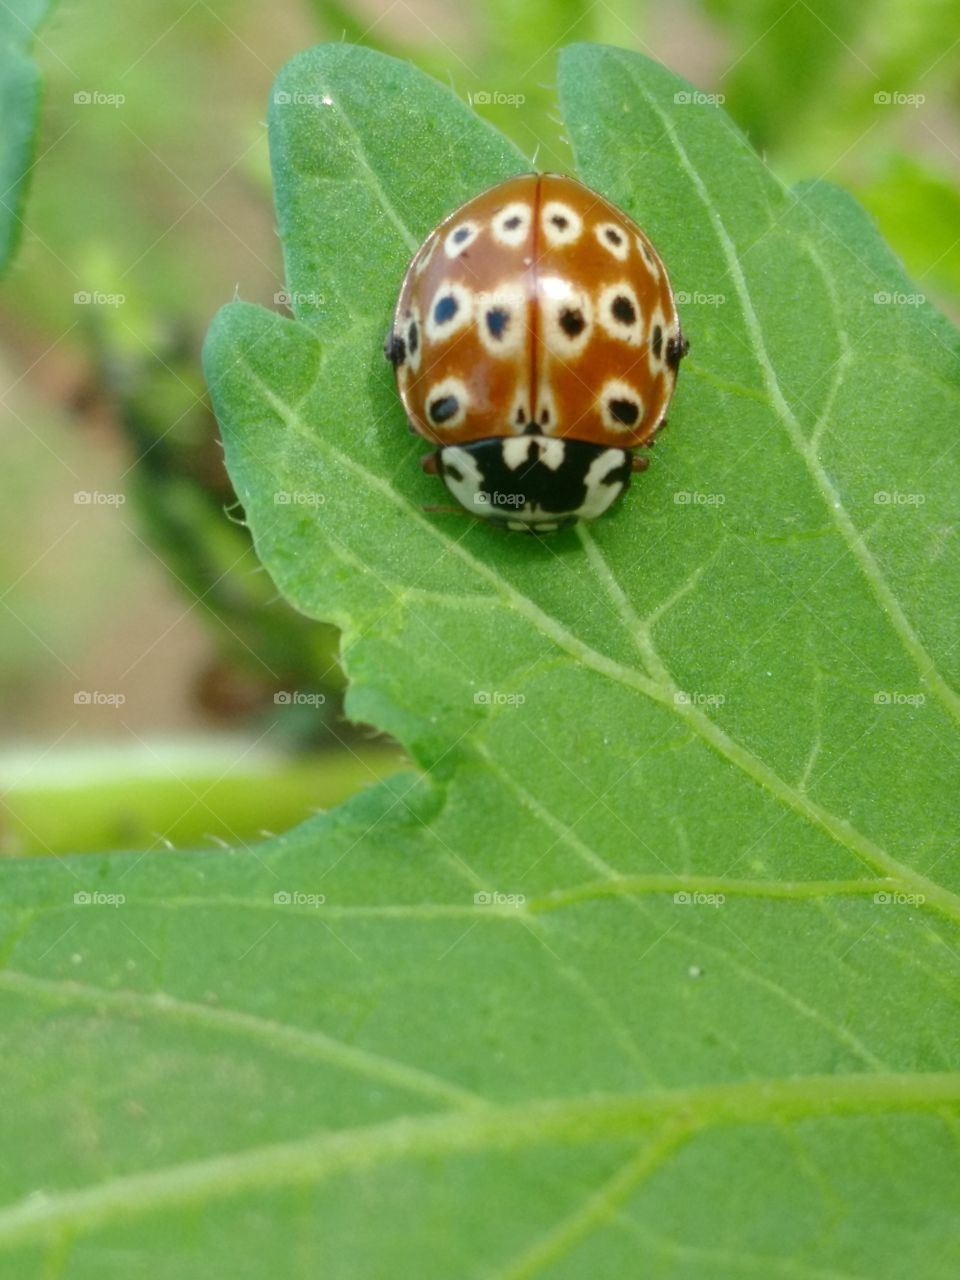 ladybugg